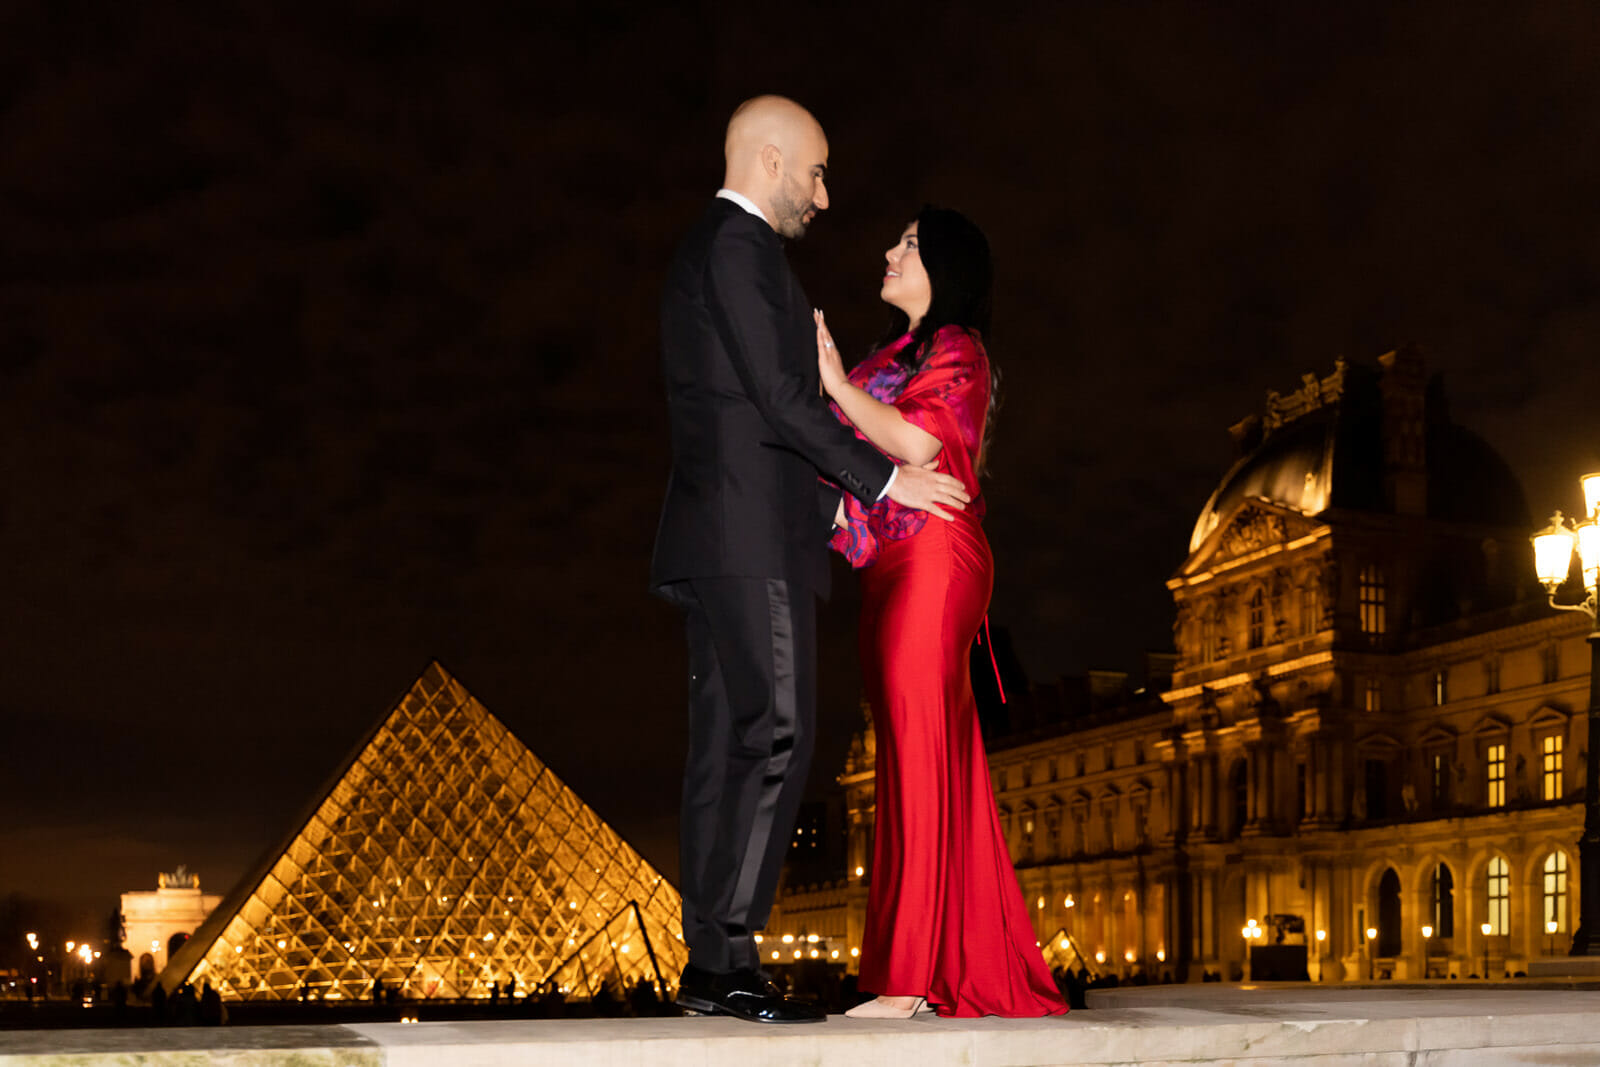 elegant Paris engagement photoshoot at night at the Louvre Museum